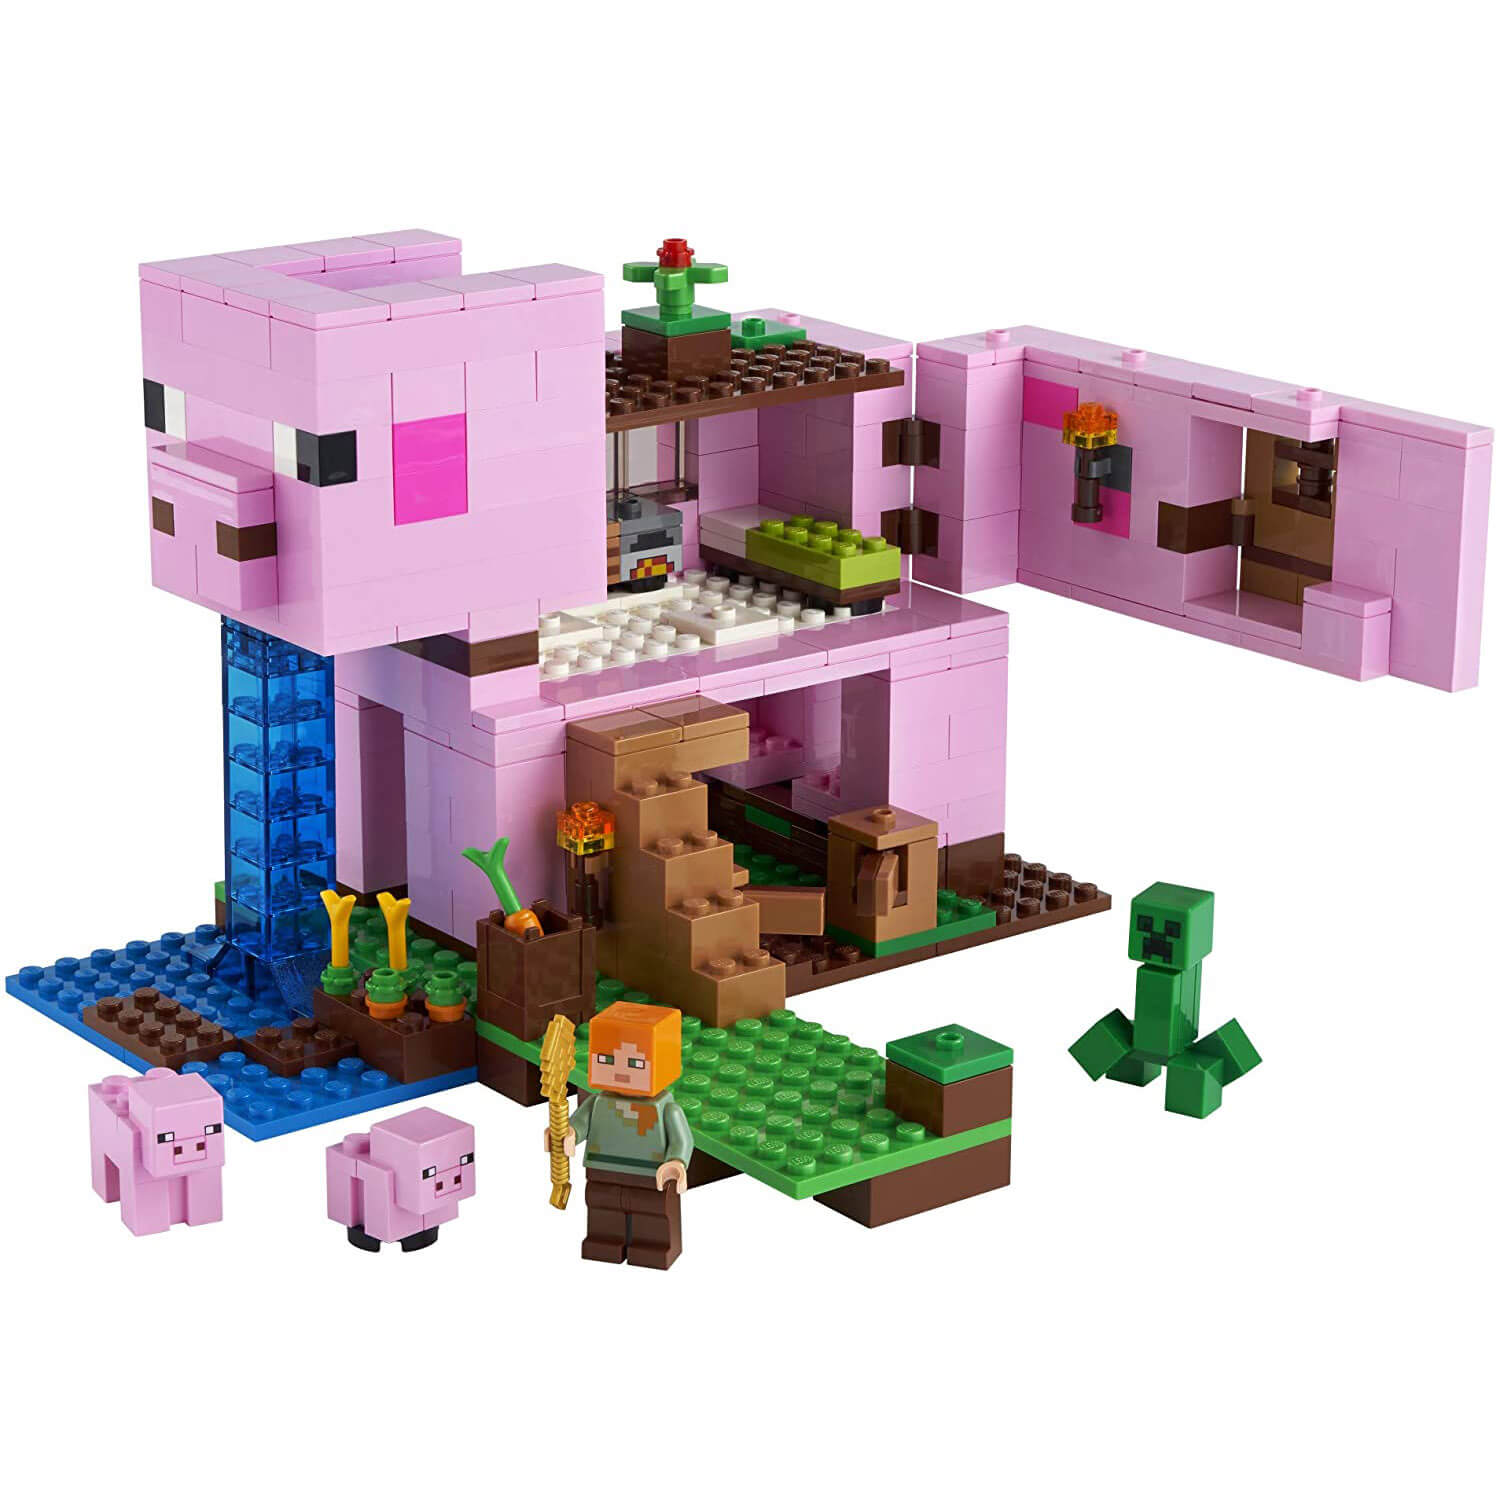 LEGO Minecraft The Pig House 490 Piece Building Set (21170)